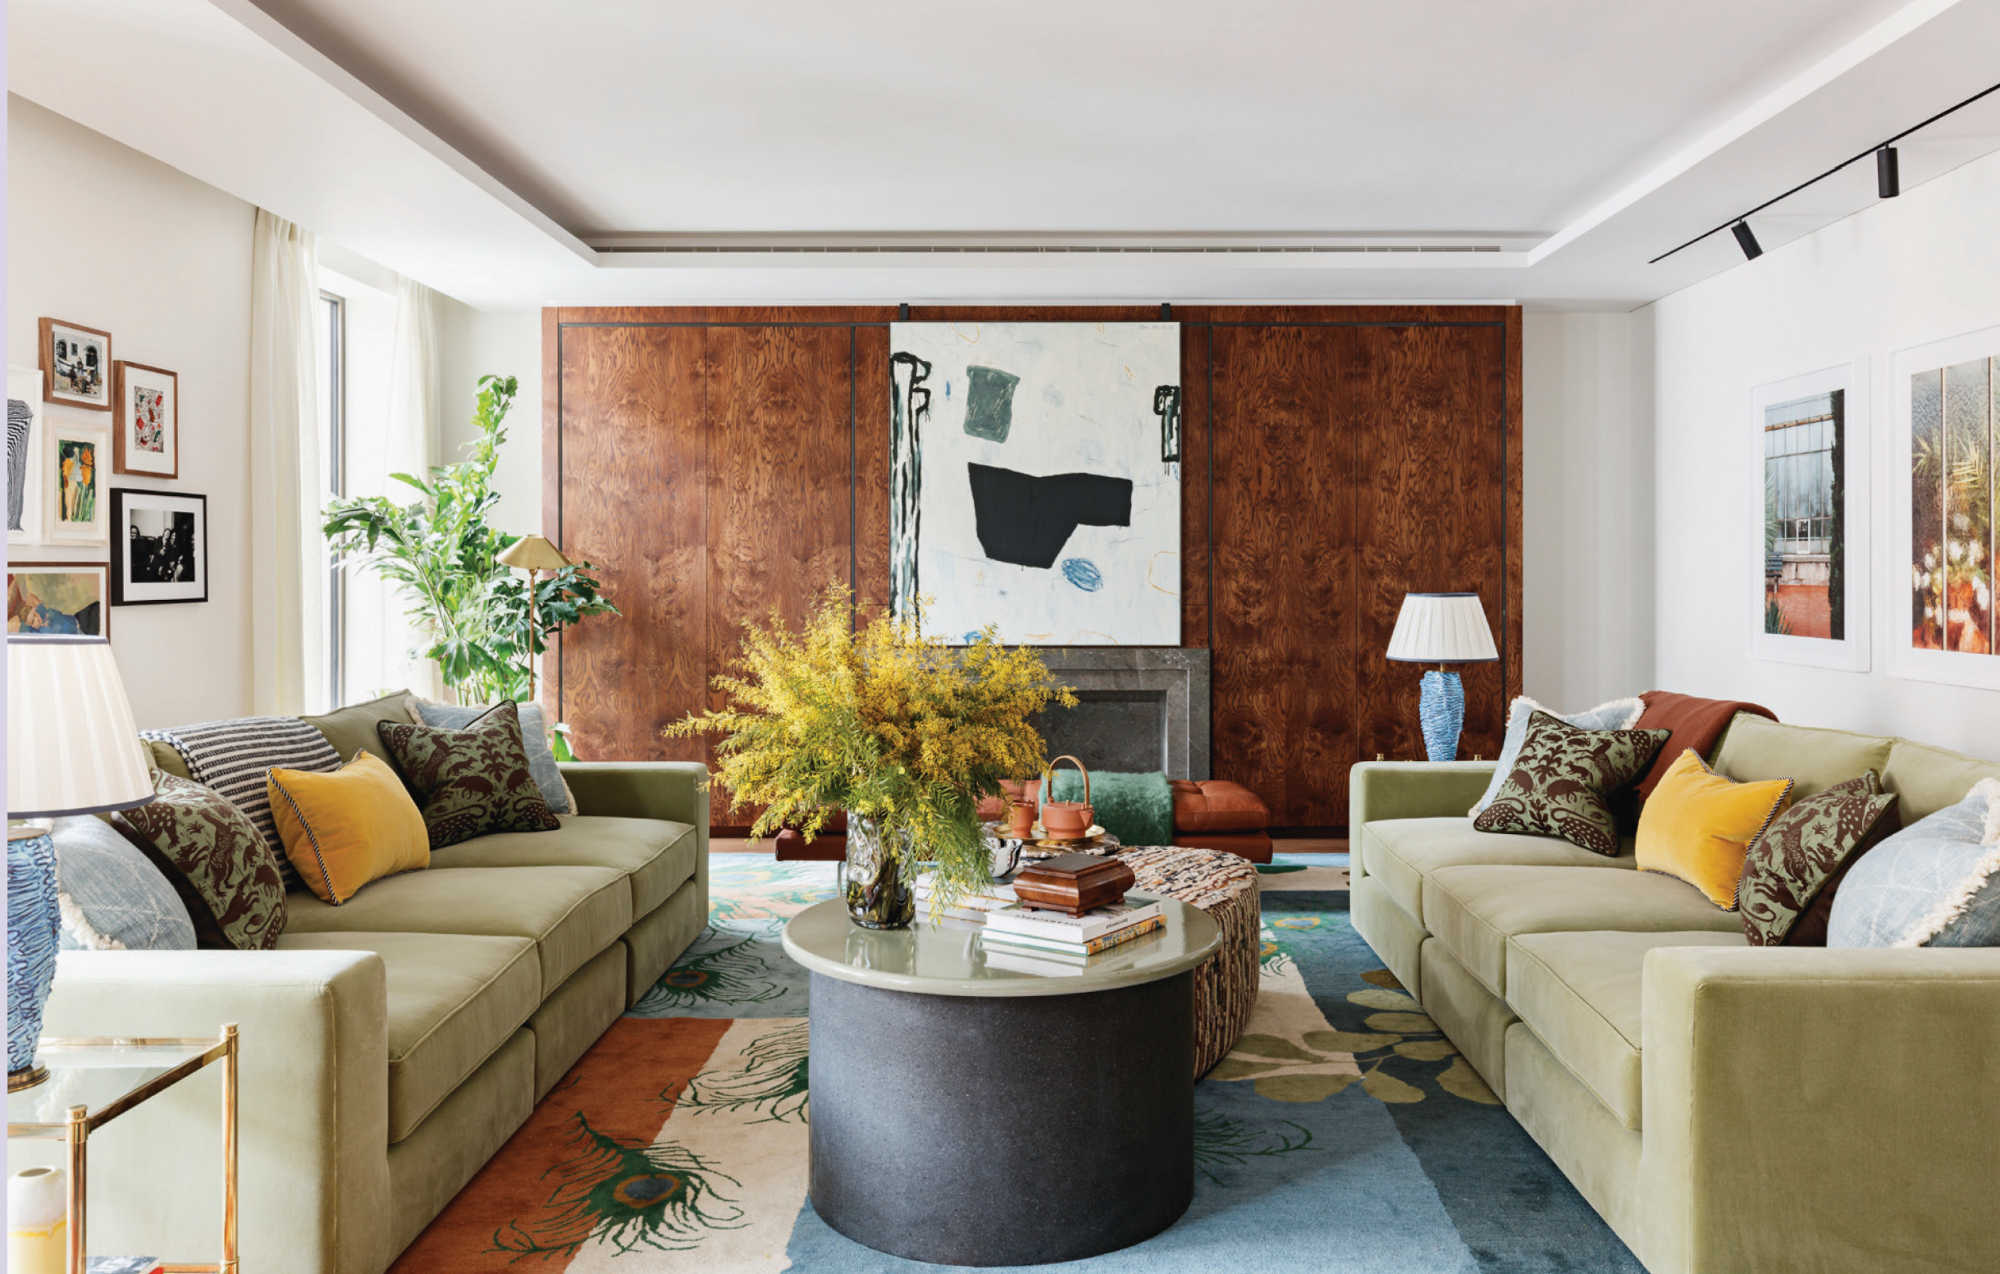 Holland Park Villas, Private Residence, Living Room, London, UK, 2019, by Studio Ashby